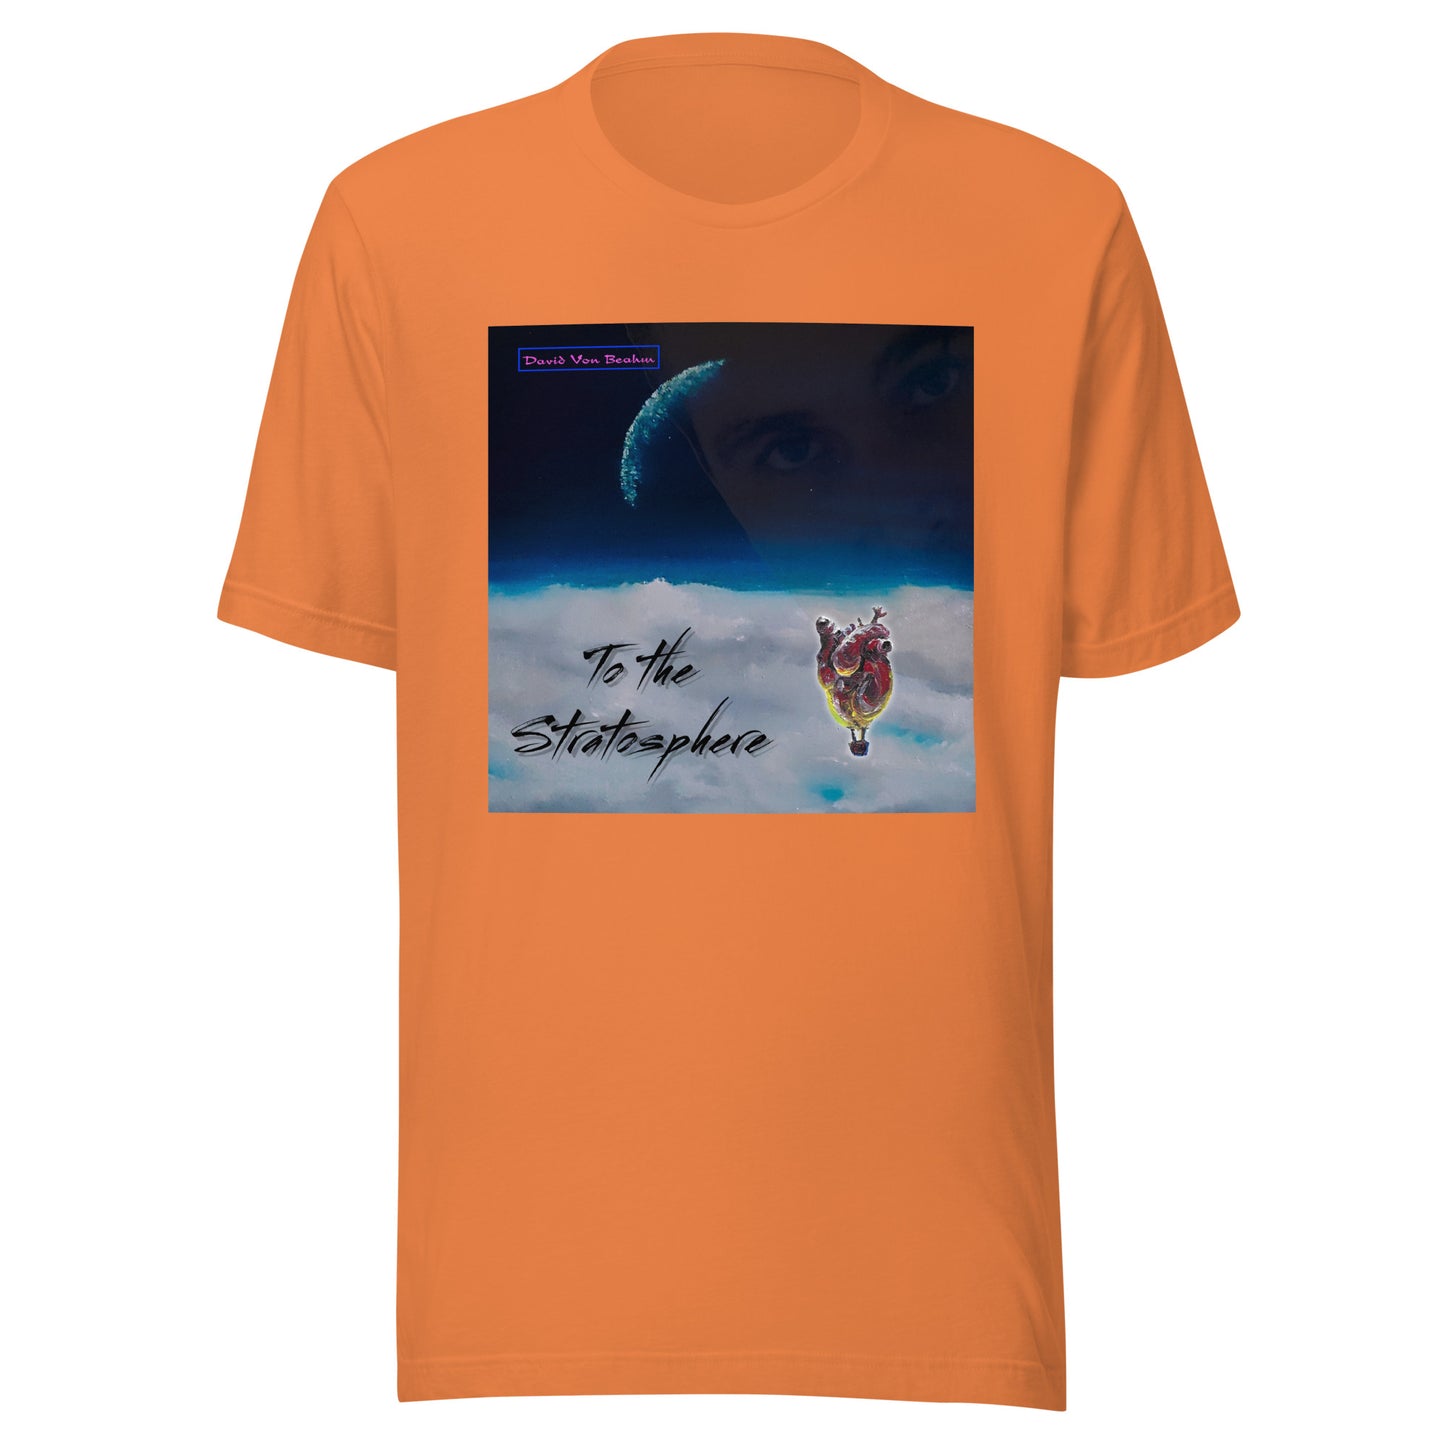 David Von Beahm - To The Stratosphere T-Shirt